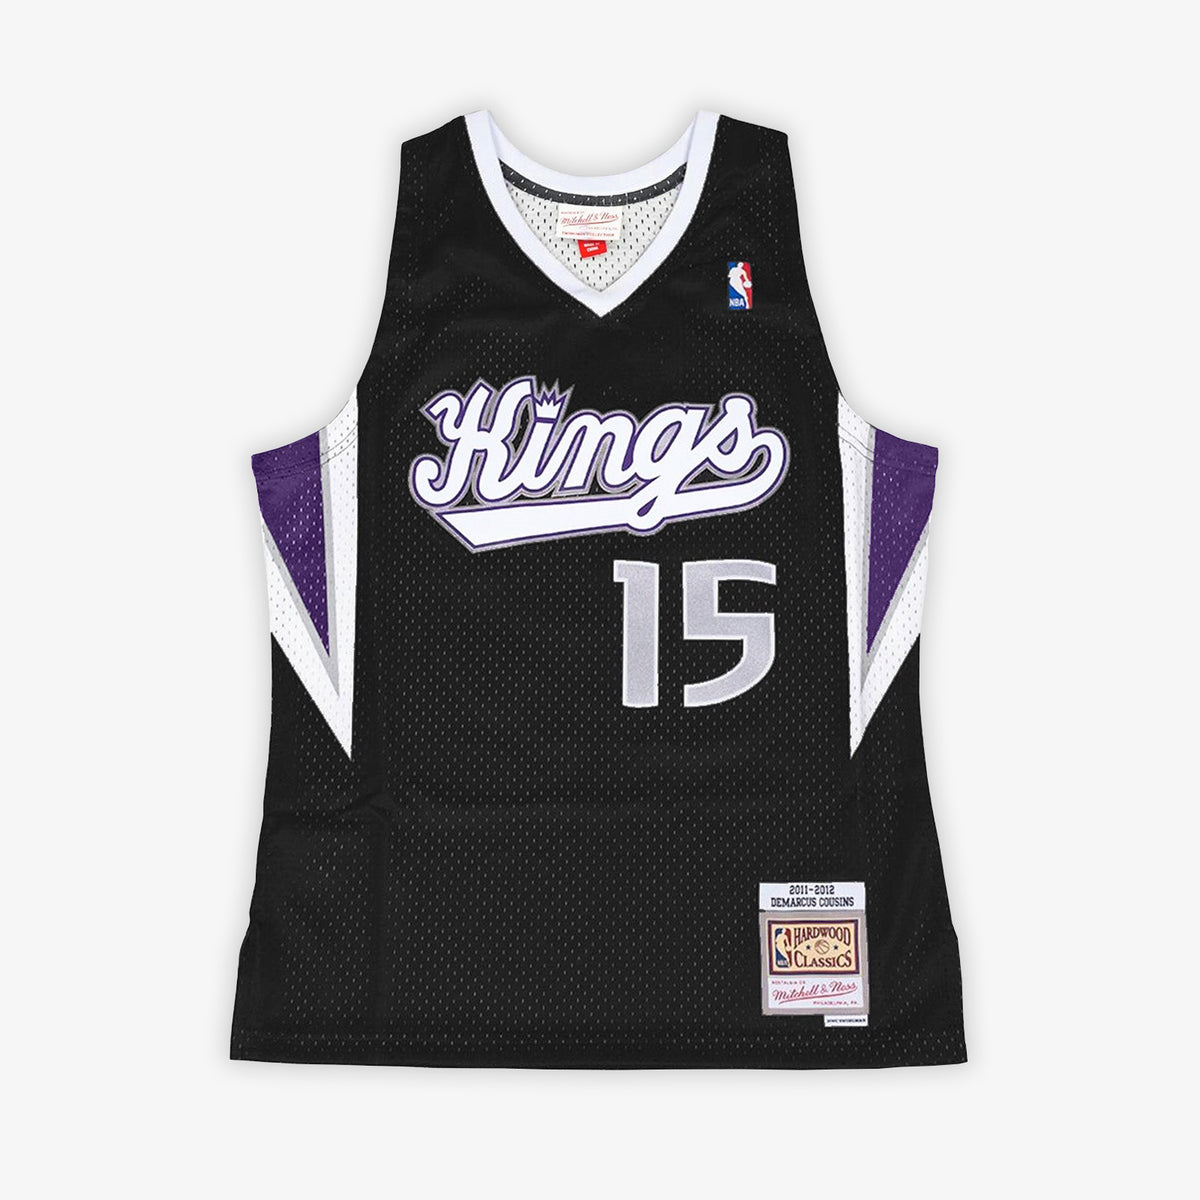 Sacramento Kings Jerseys, Kings Basketball Jerseys